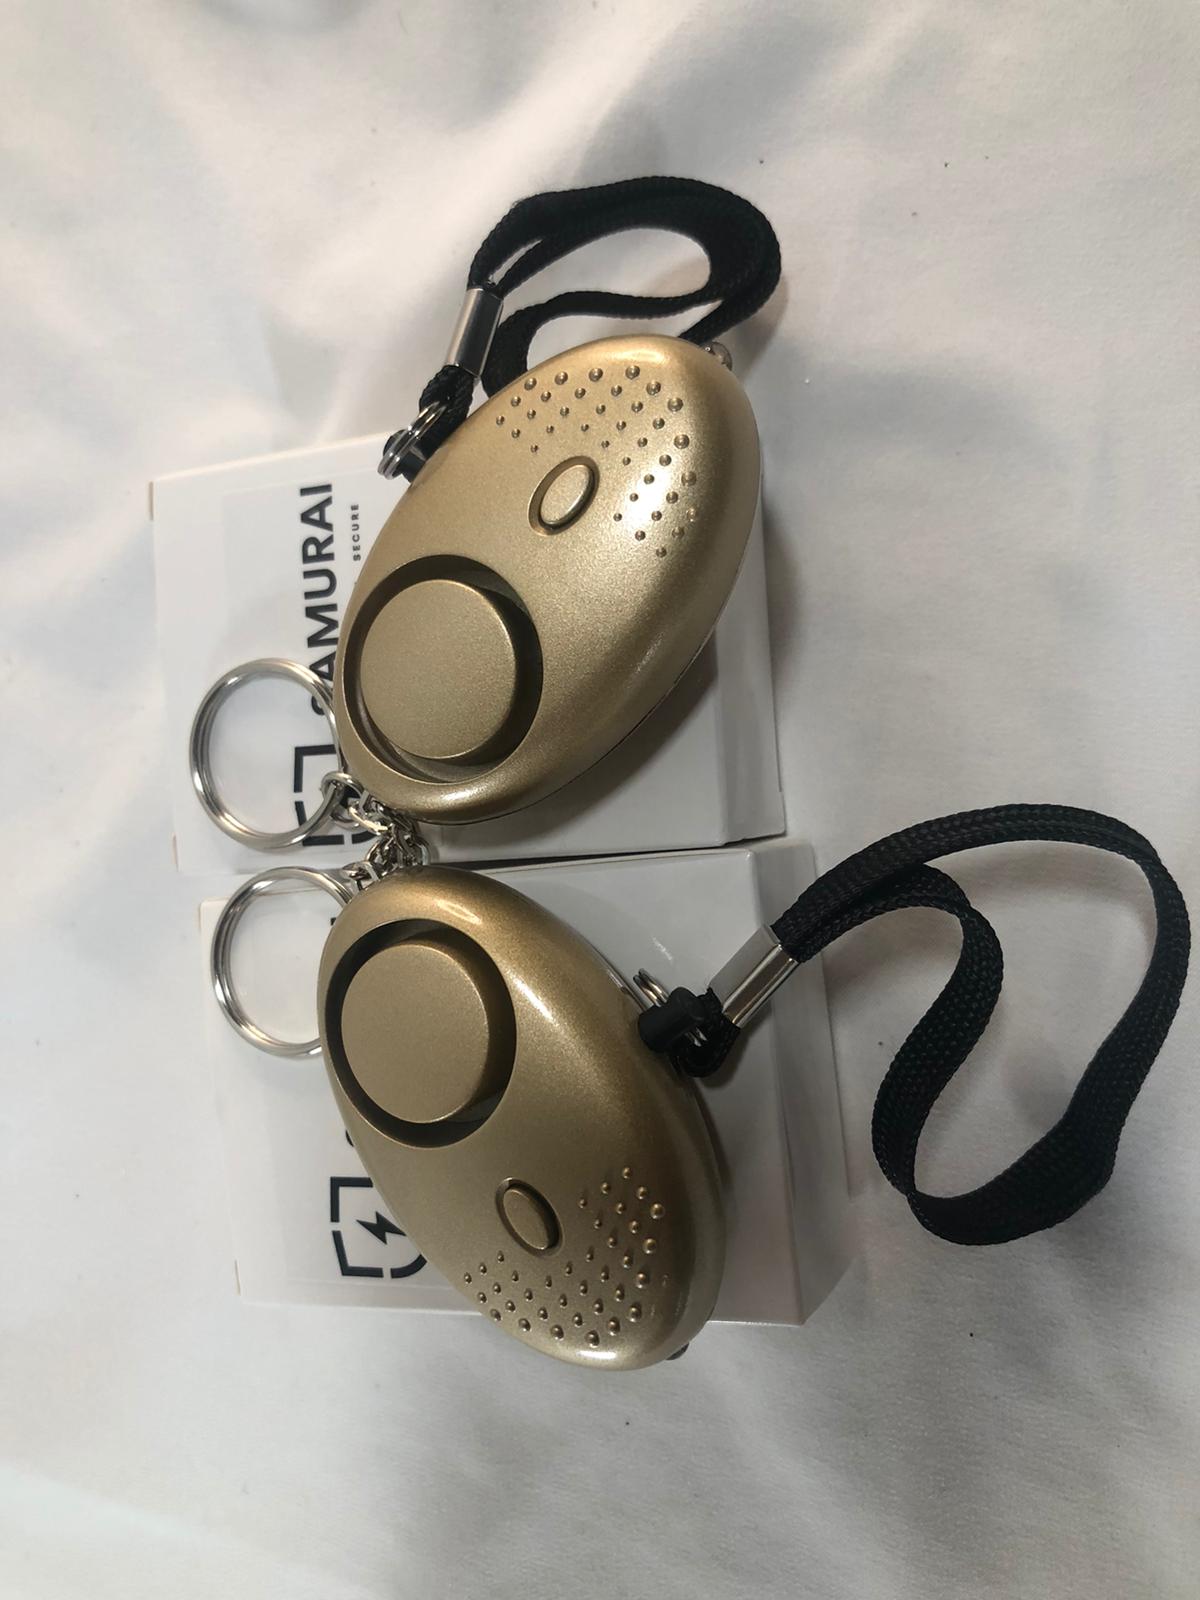 Samurai Safety Alarm Keychain W/ LED Light 2-Pack